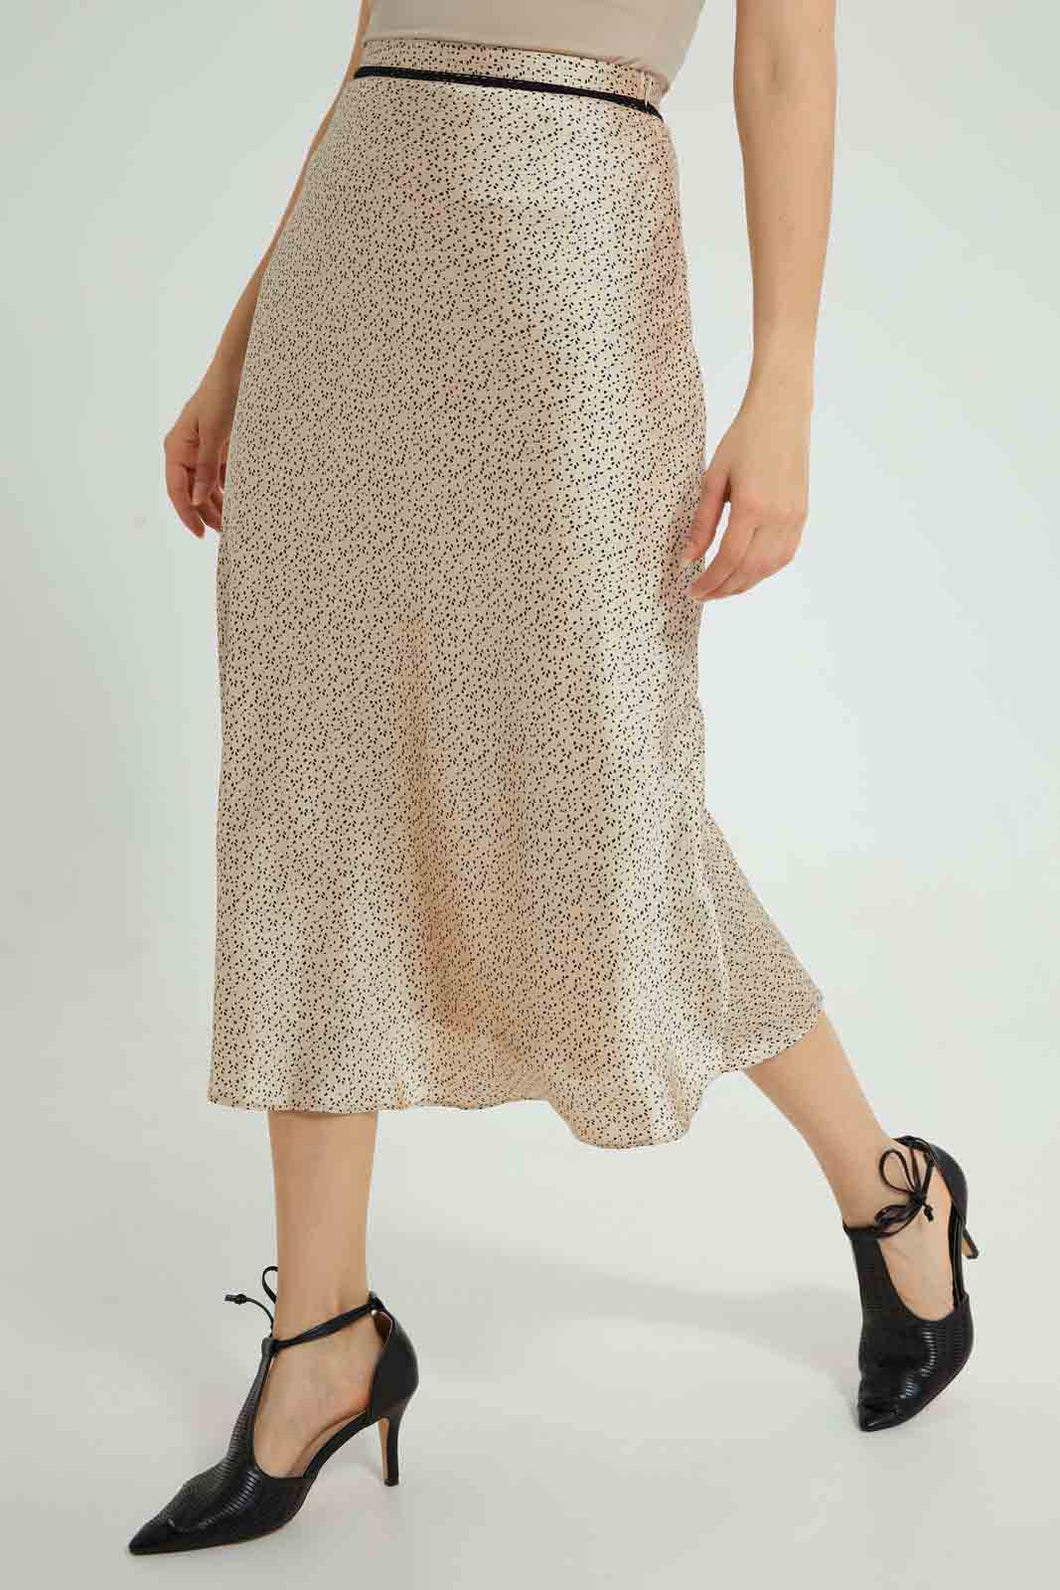 Beige Printed Satin Skirt تنورة ستان باللون البيج